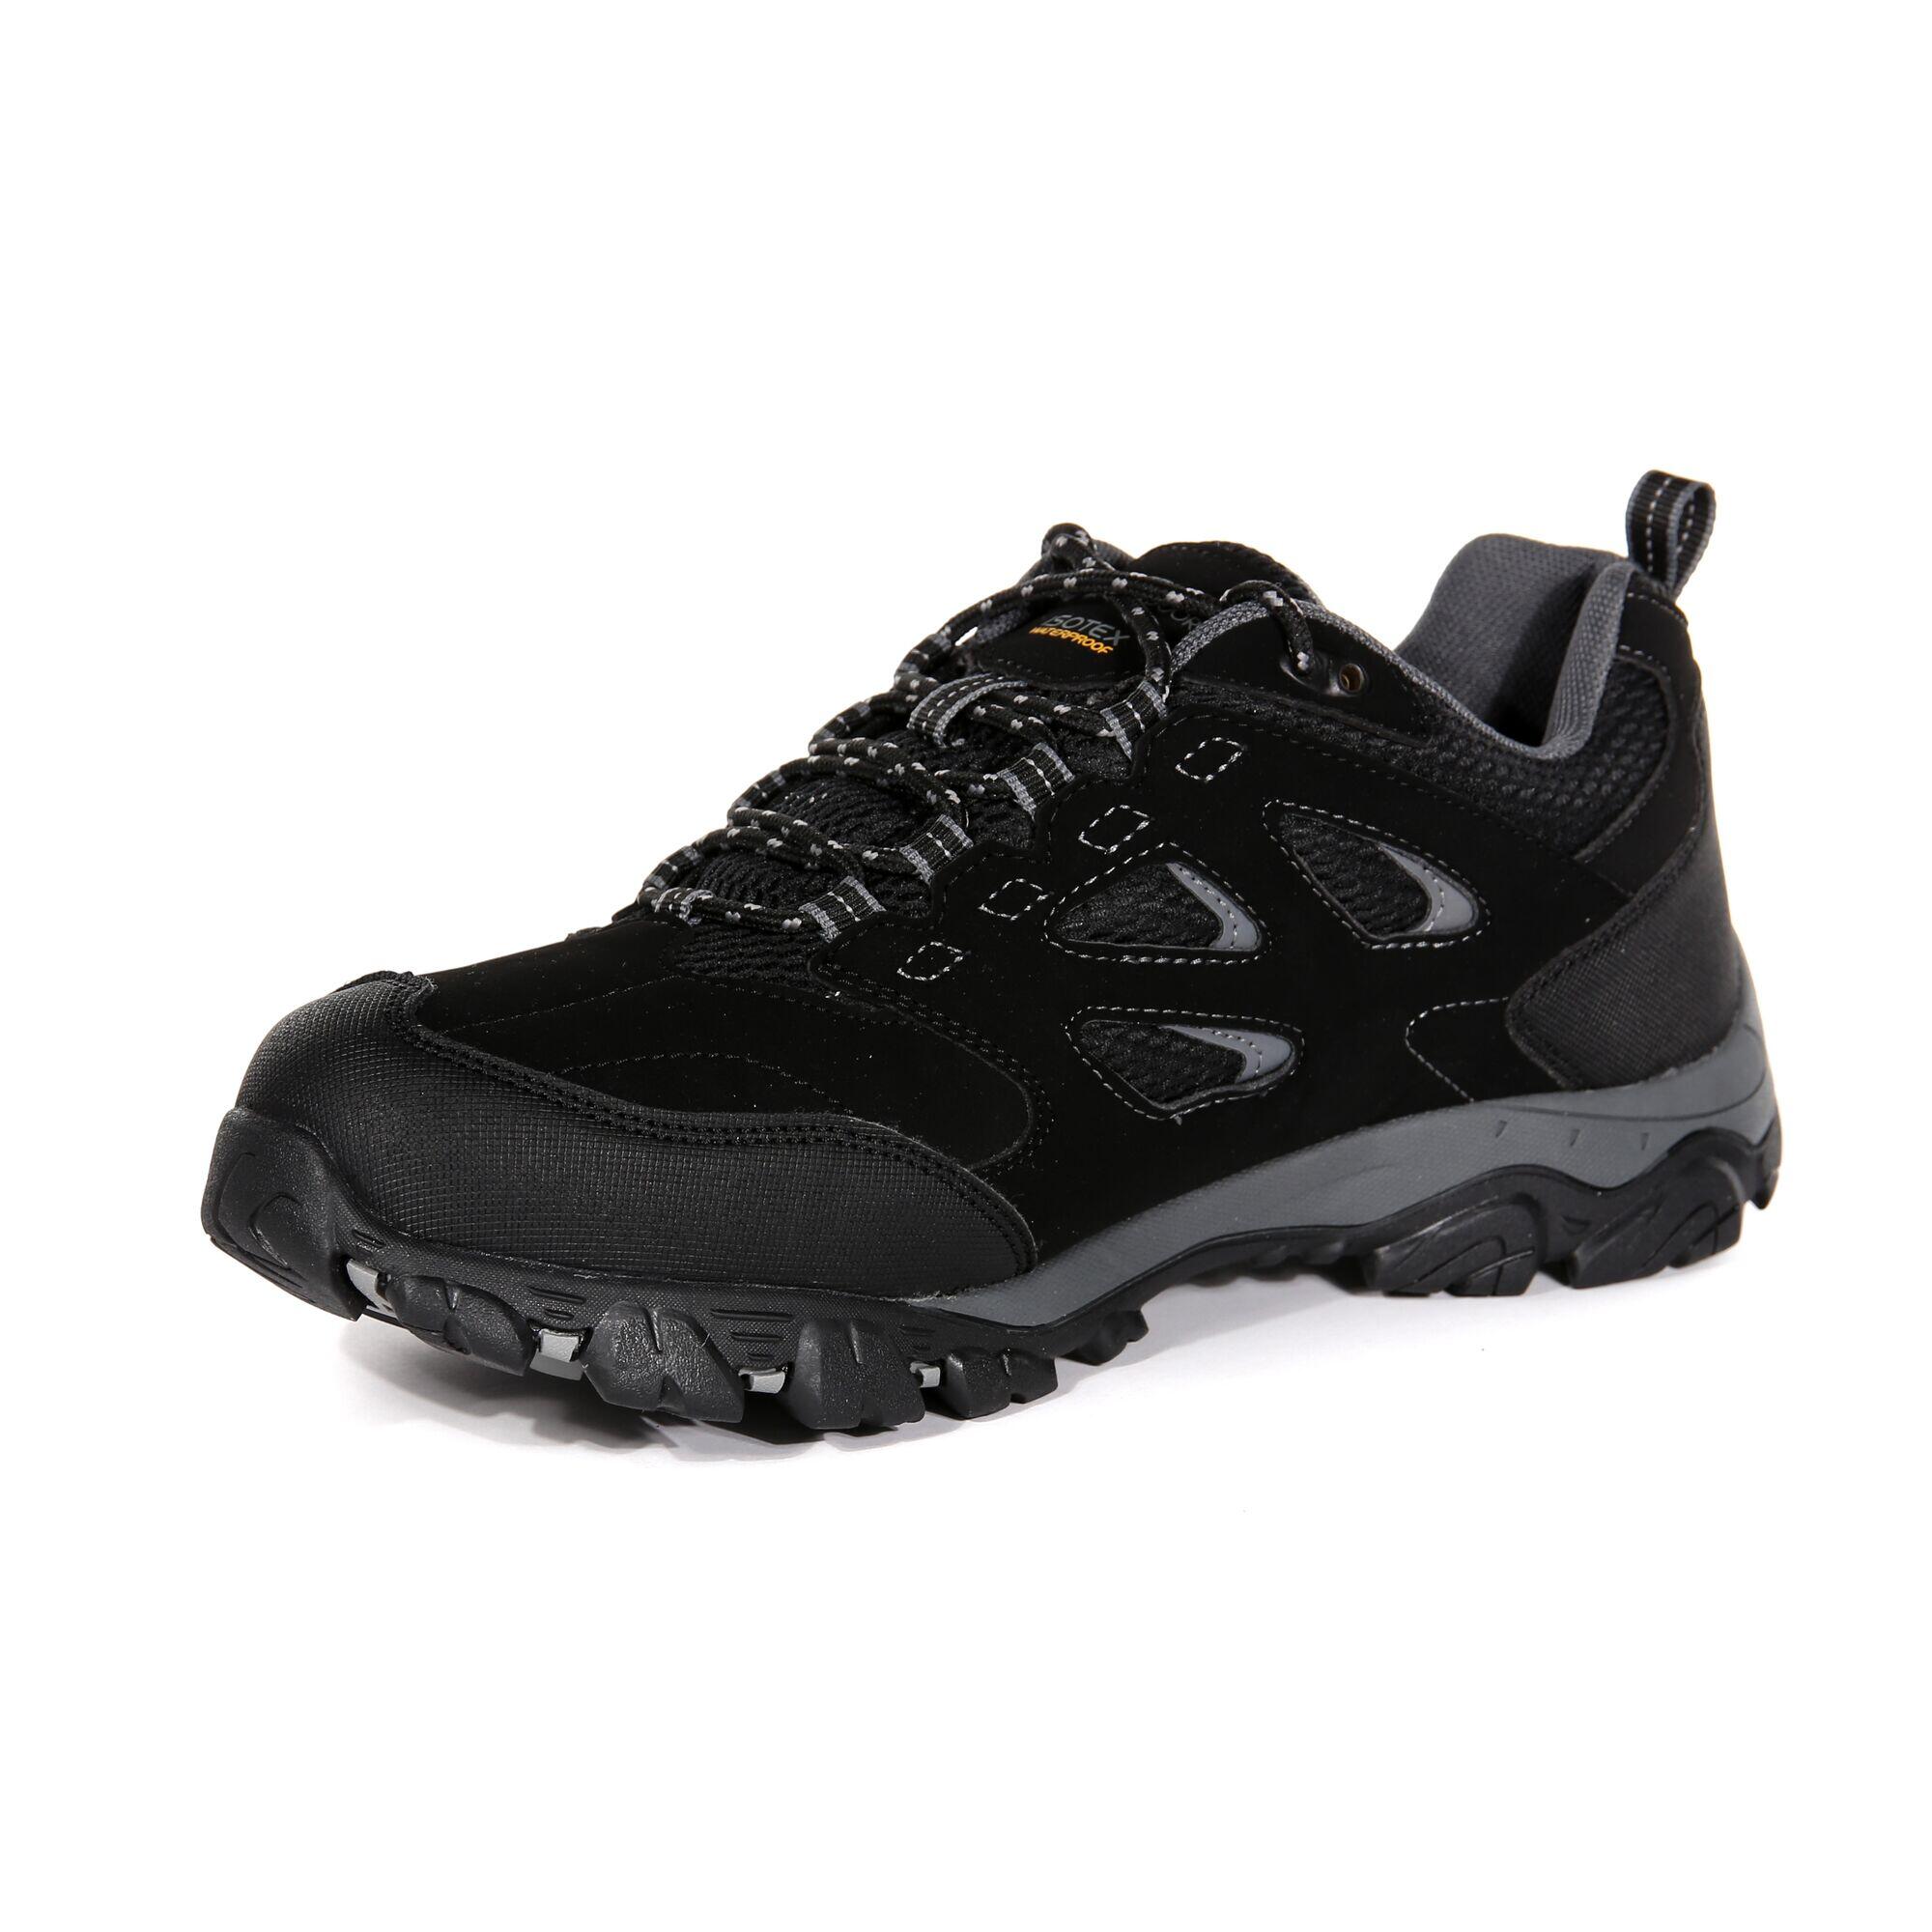 Holcombe IEP Low Men's Hiking Boots - Black Granite 4/5